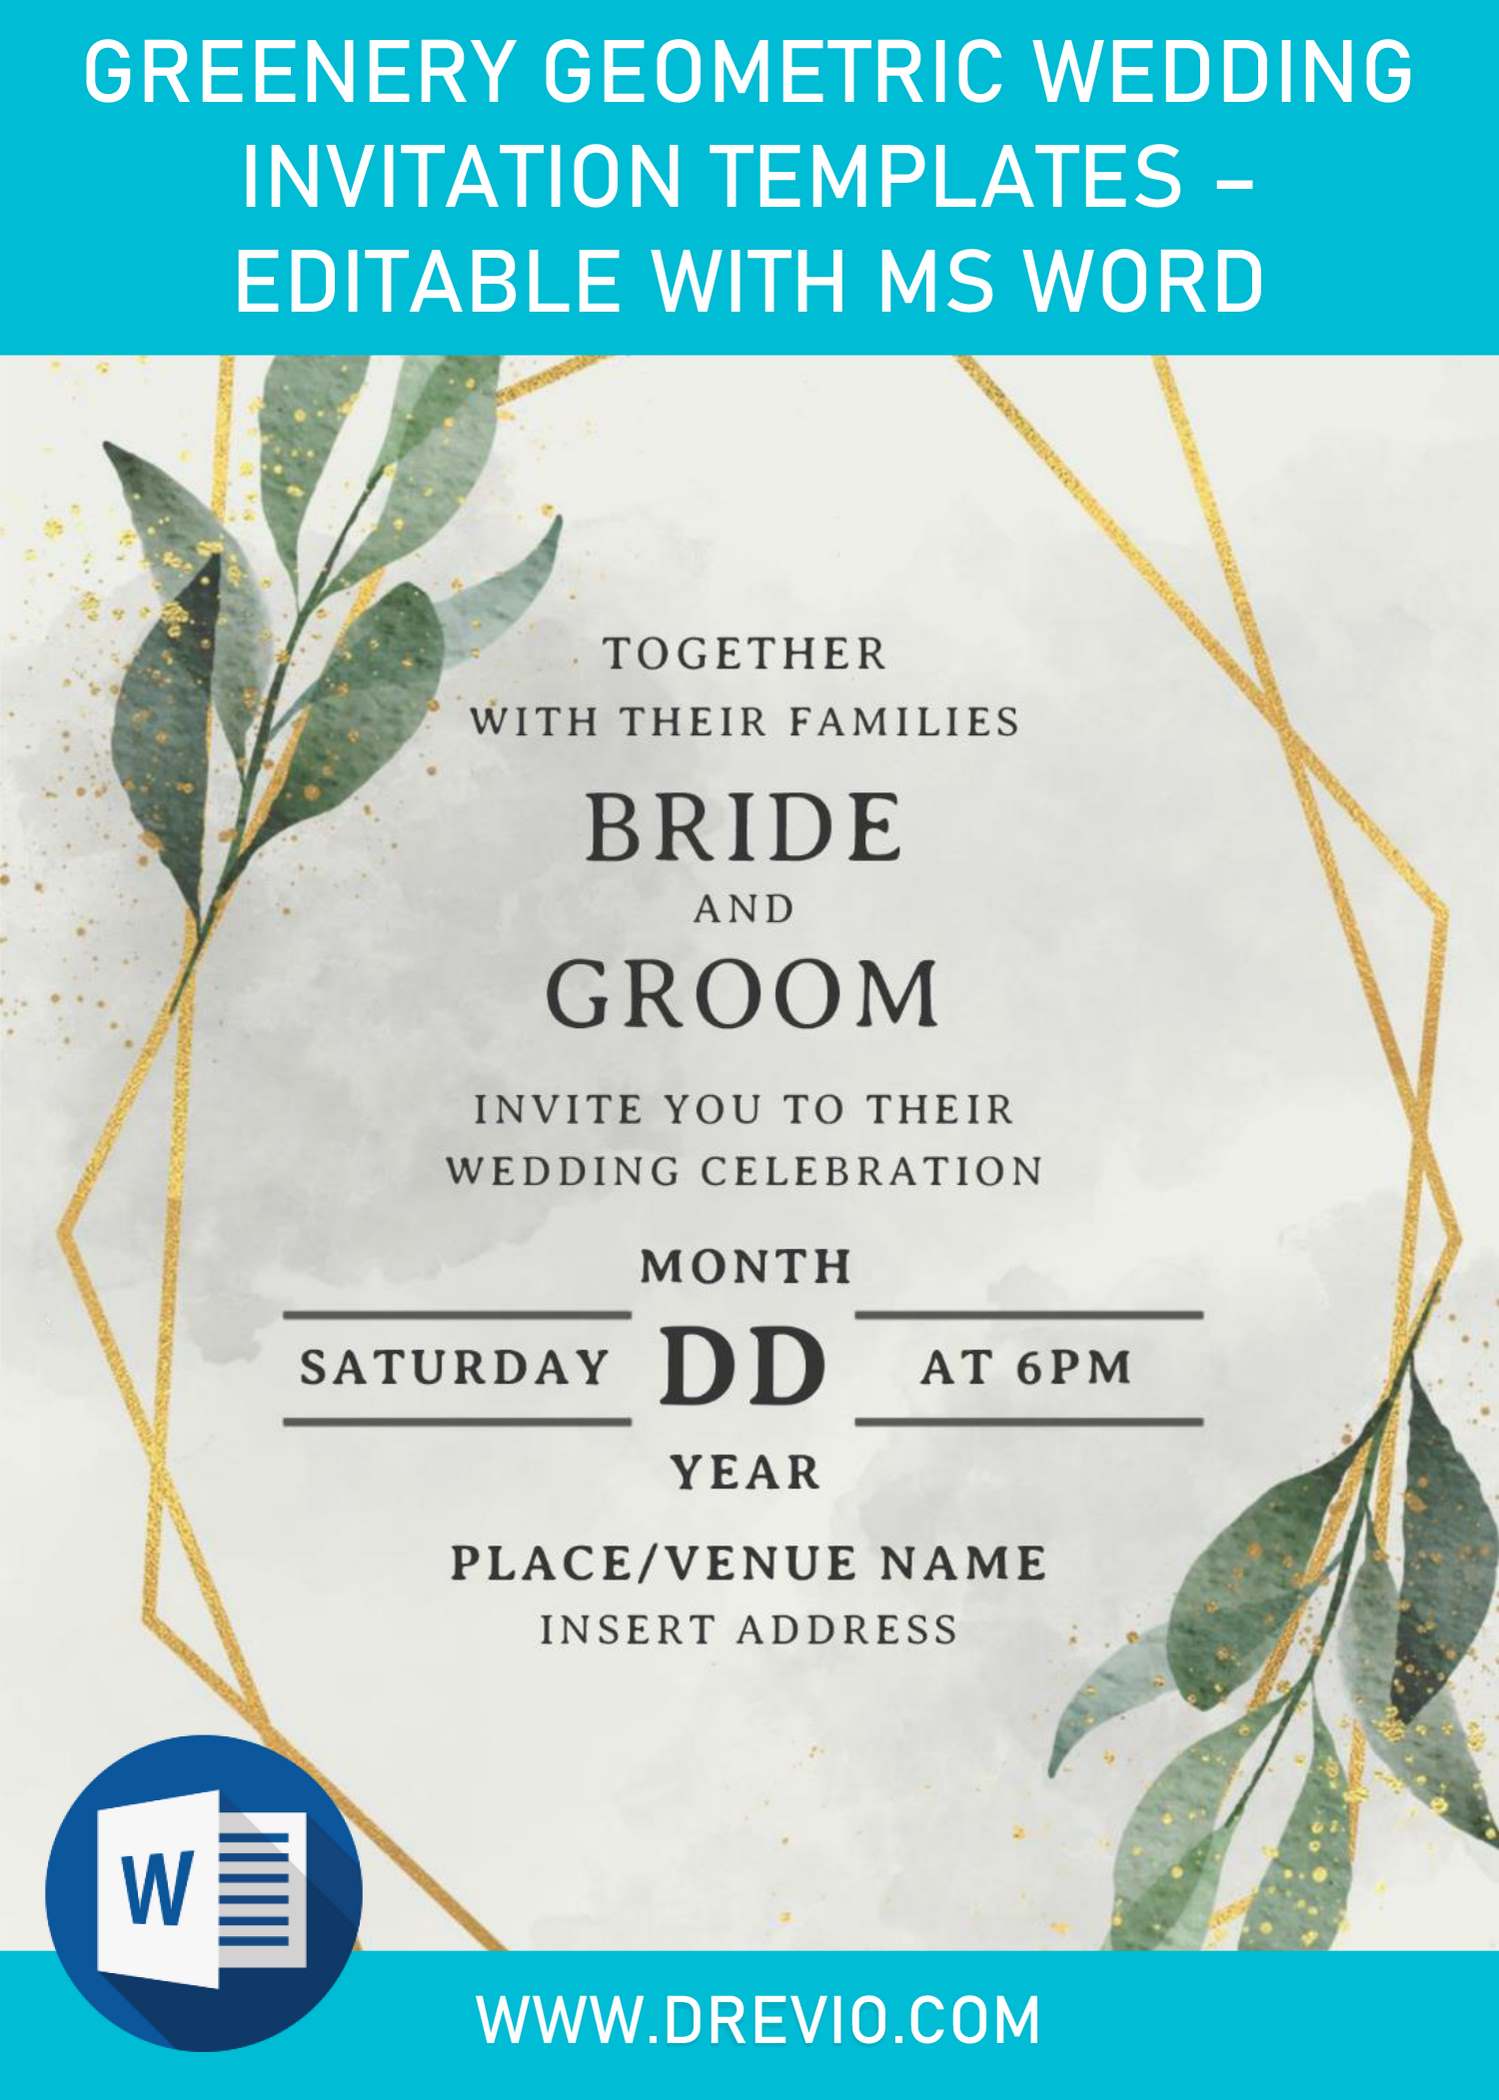 Greenery Geometric Wedding Invitation Templates - Editable With MS Word and has